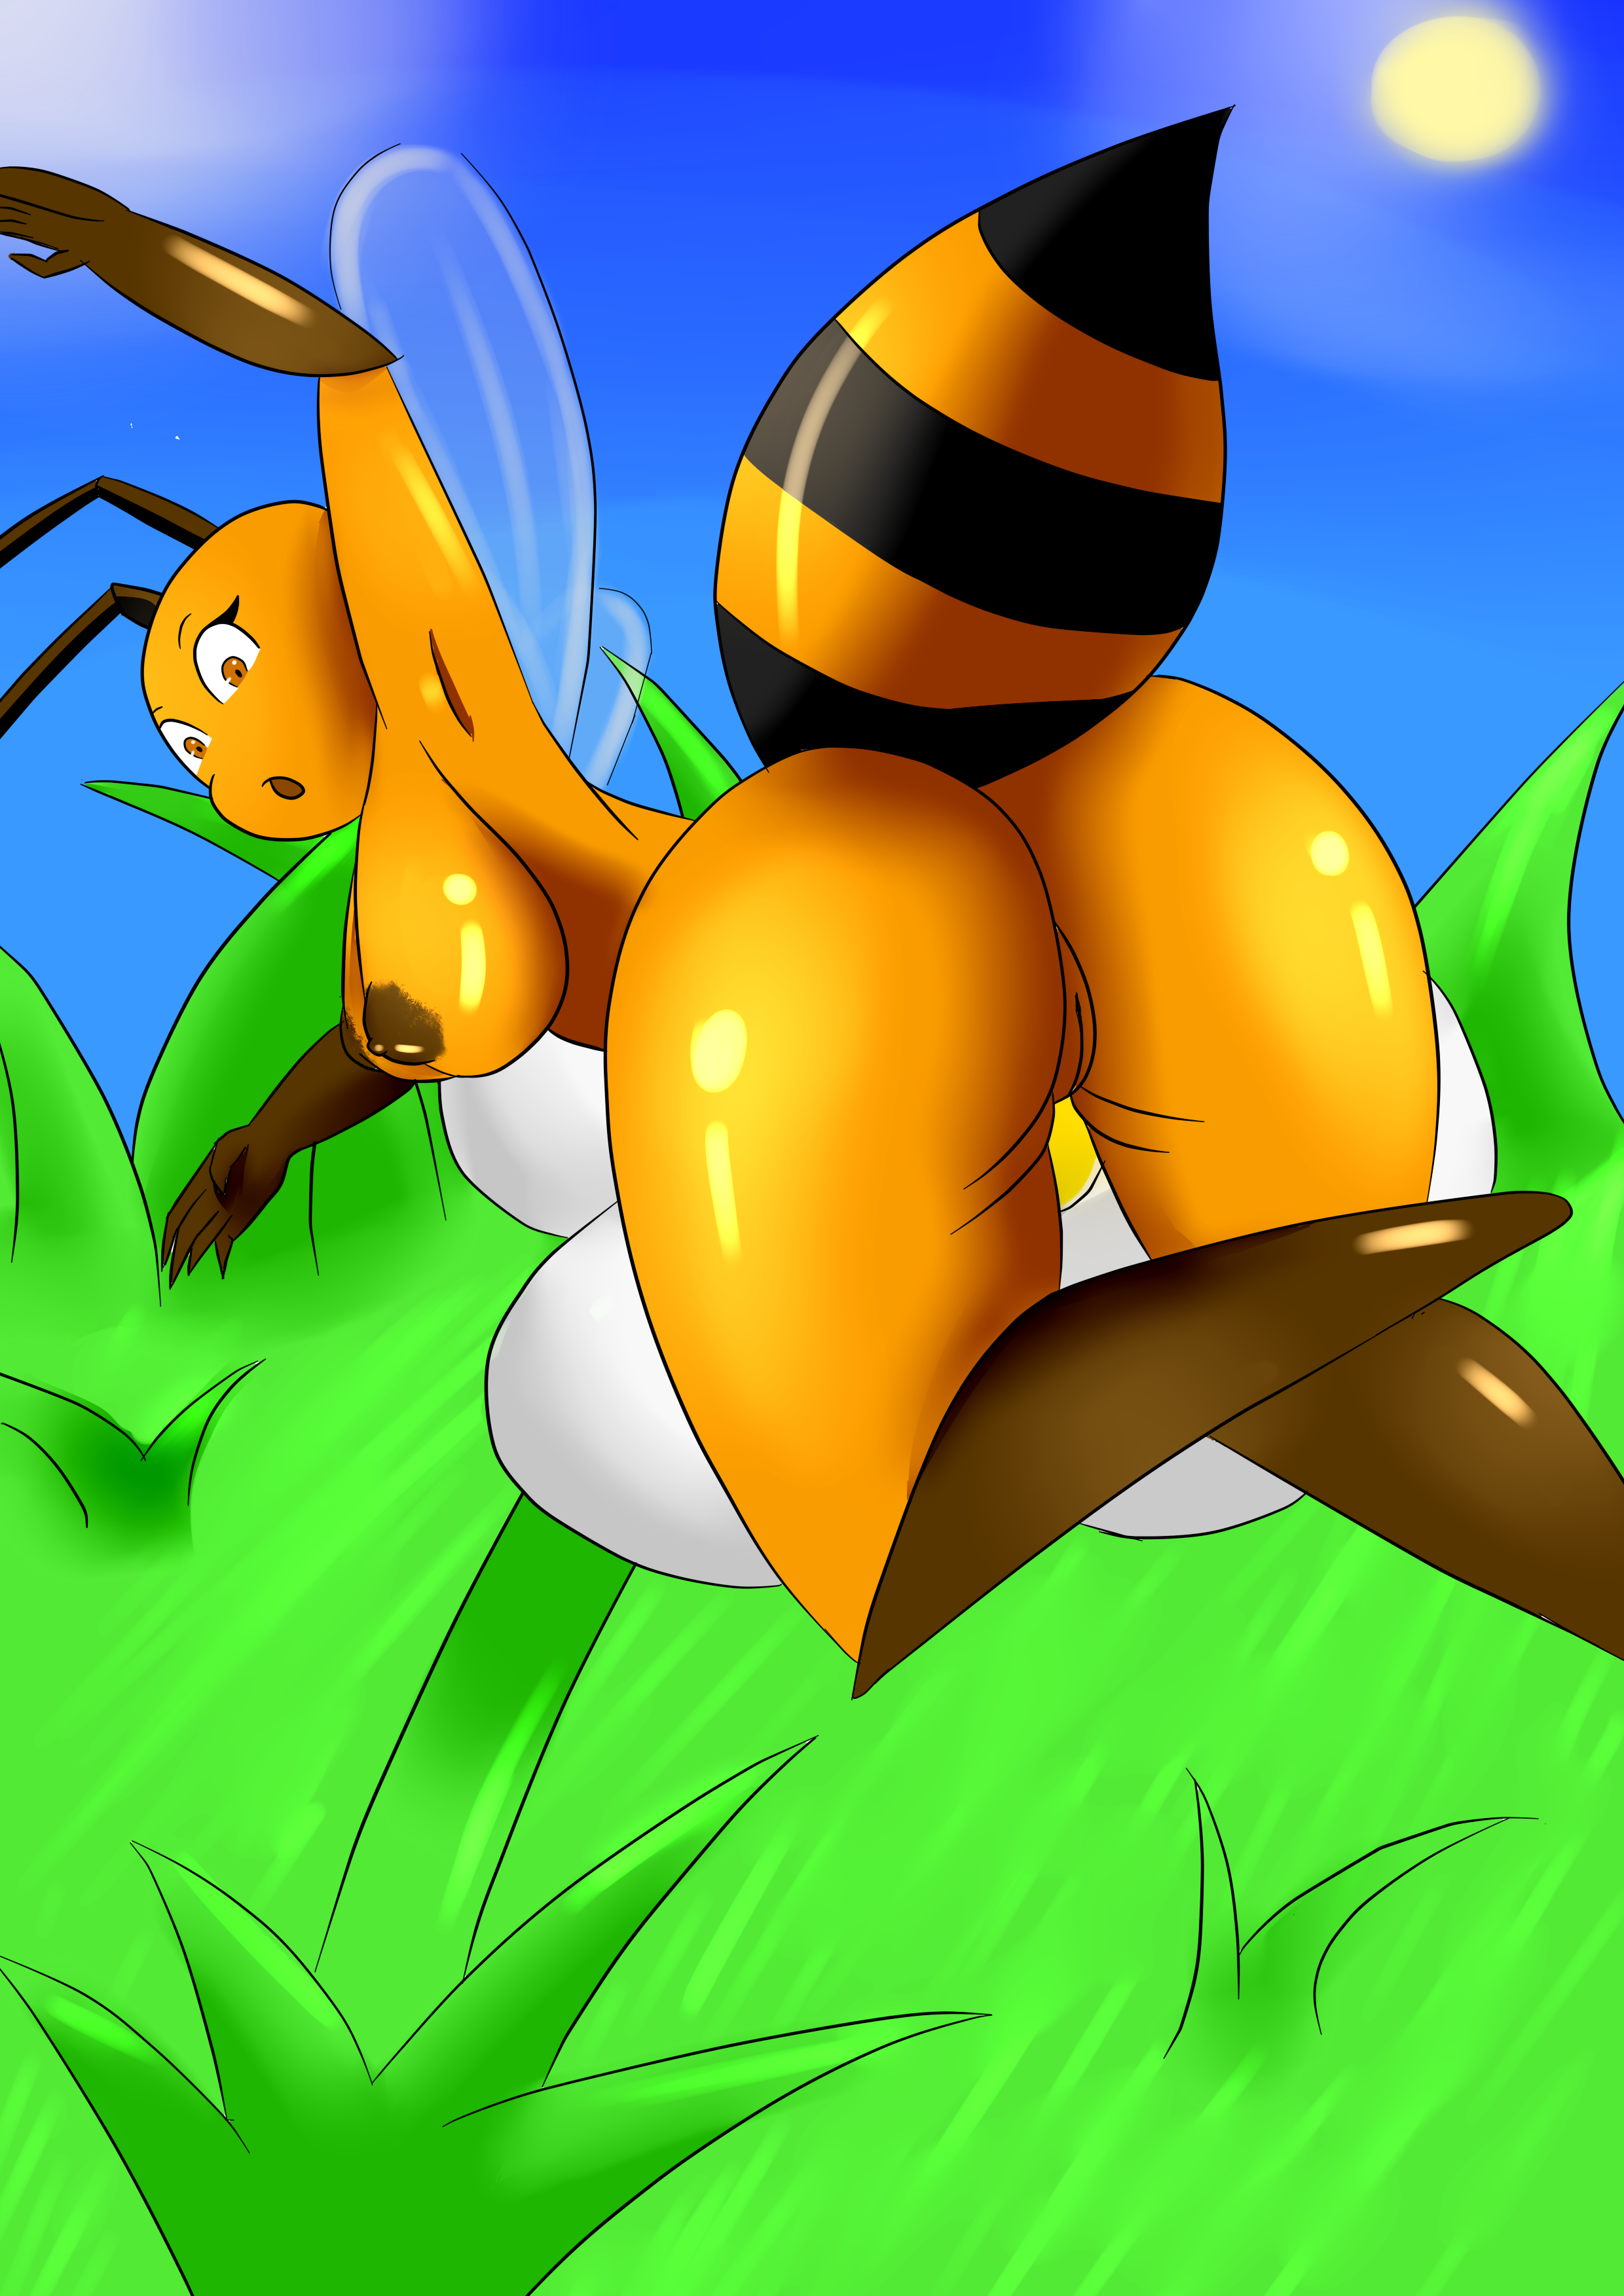 The bees порно фото 25